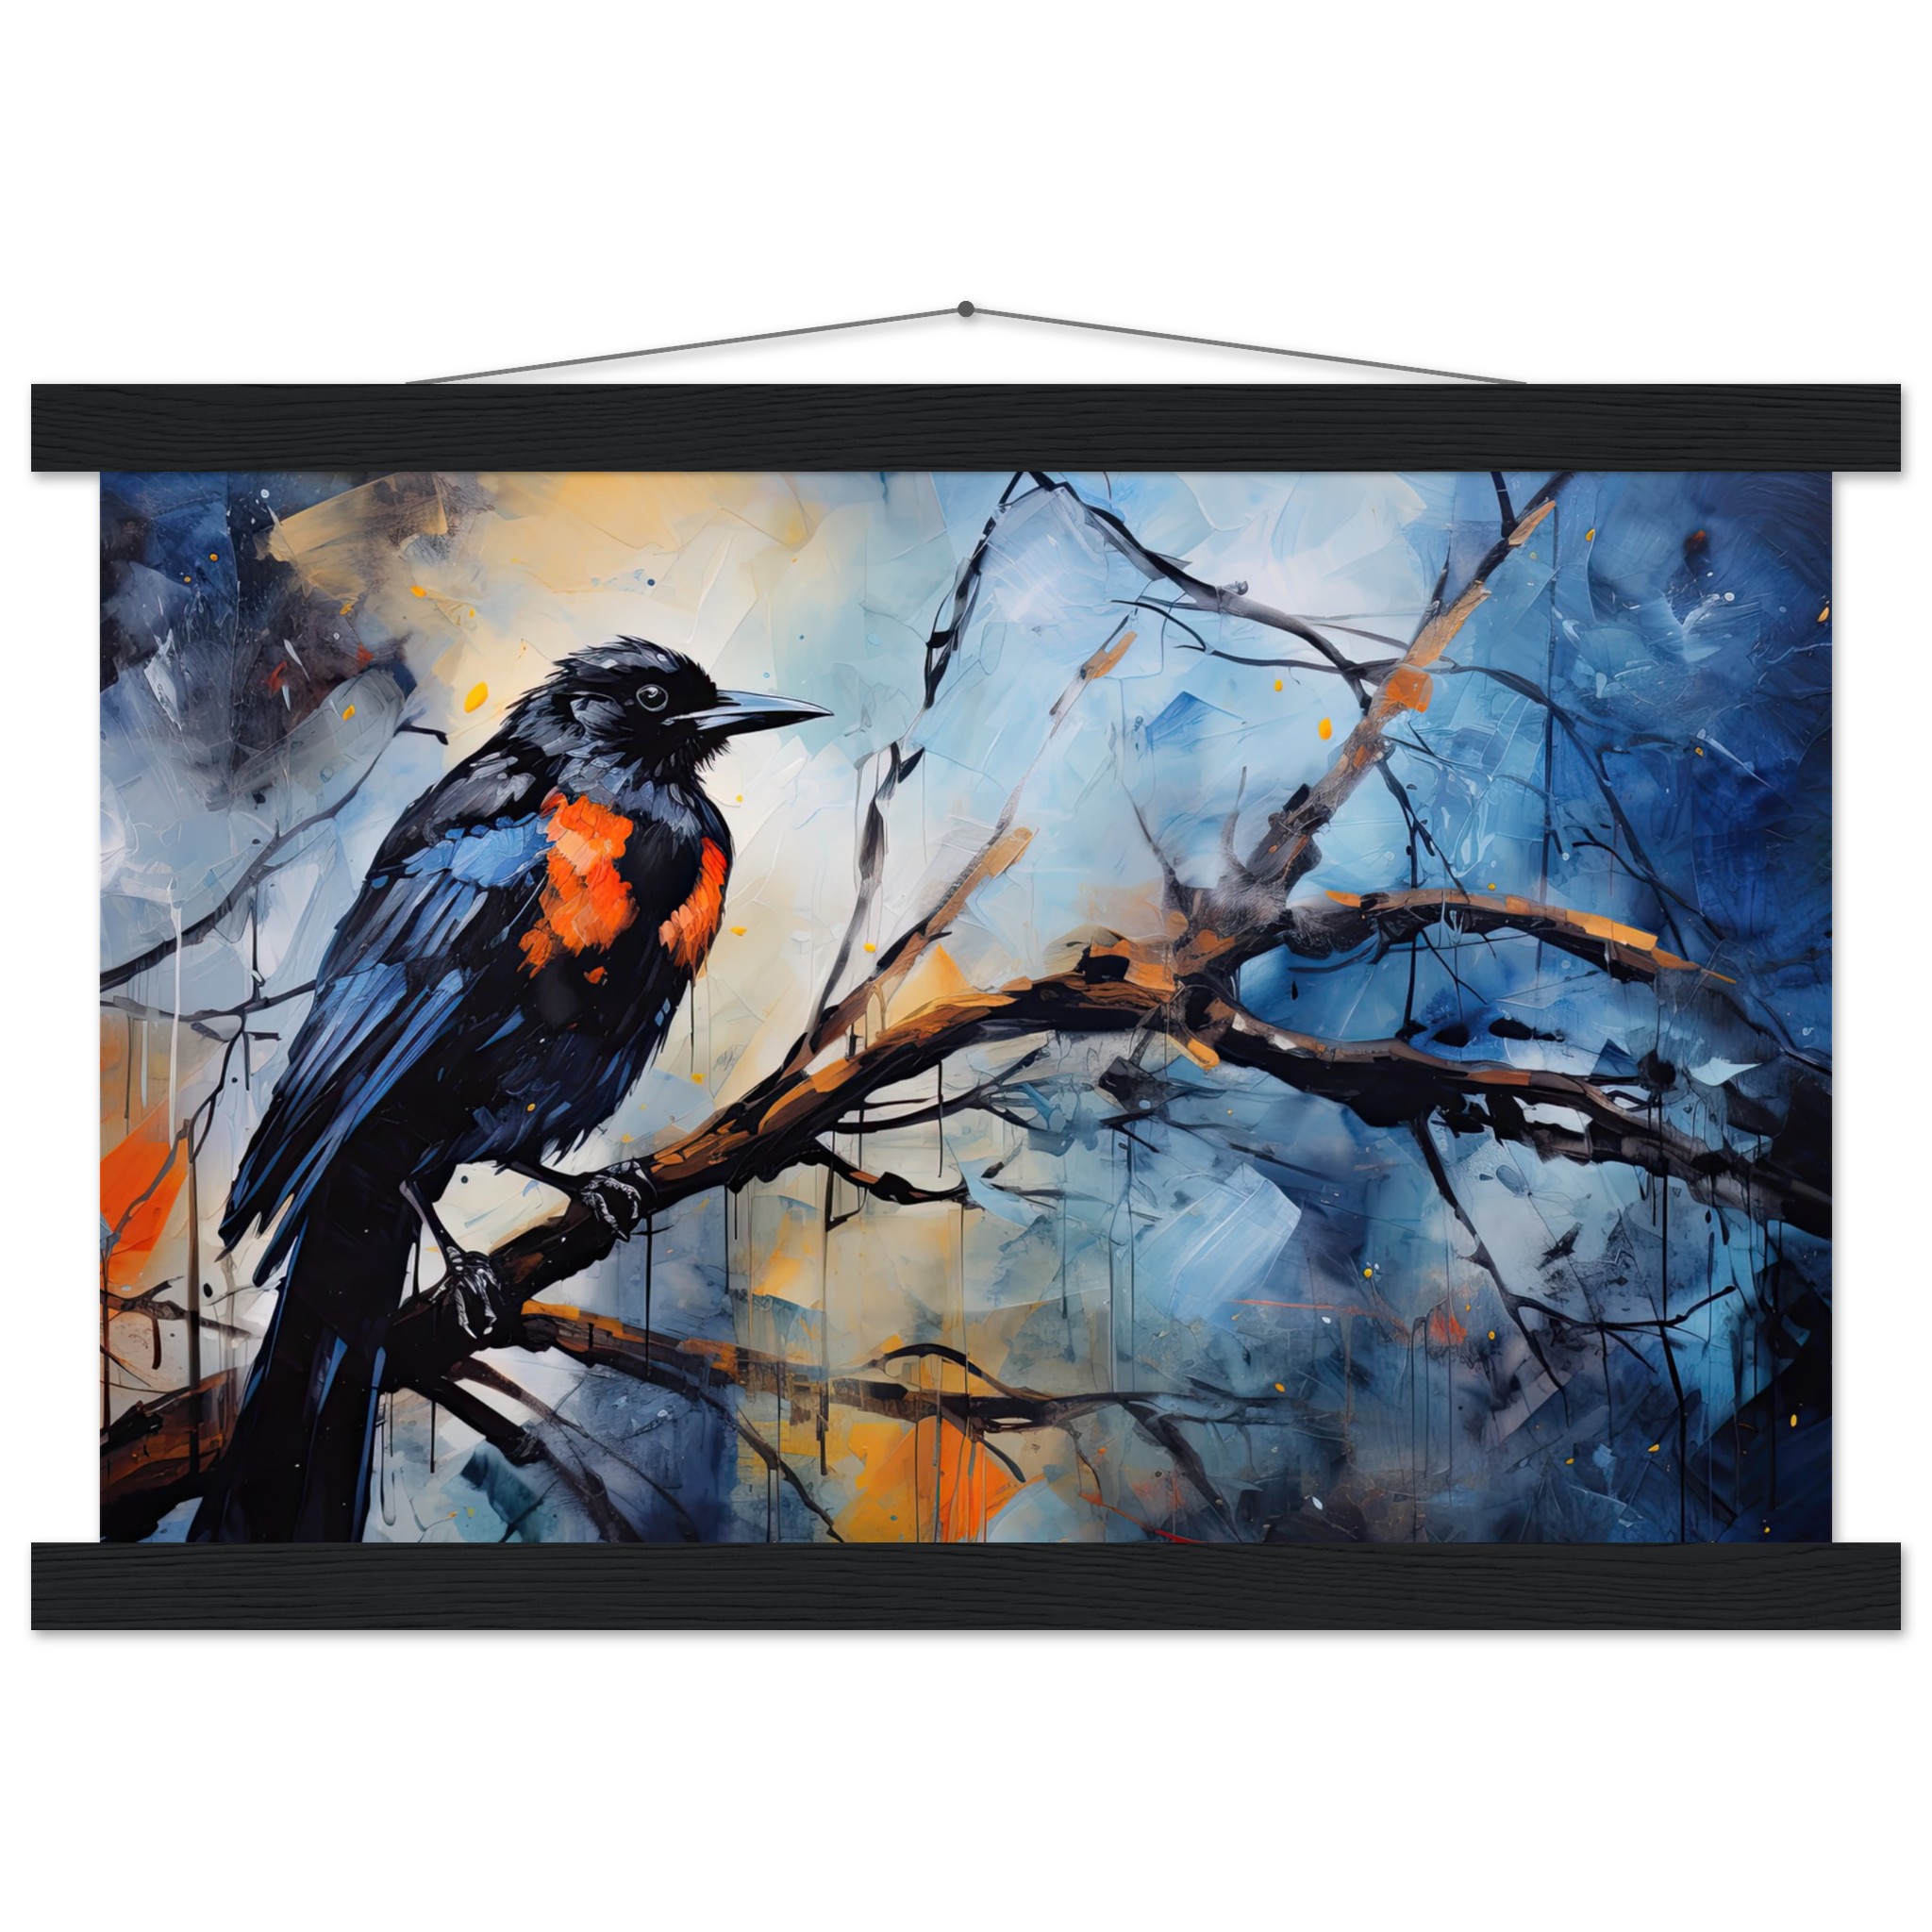 Bird Watercolor Painting Abstract Hanging Print – 30×45 cm / 12×18″, Black wall hanger